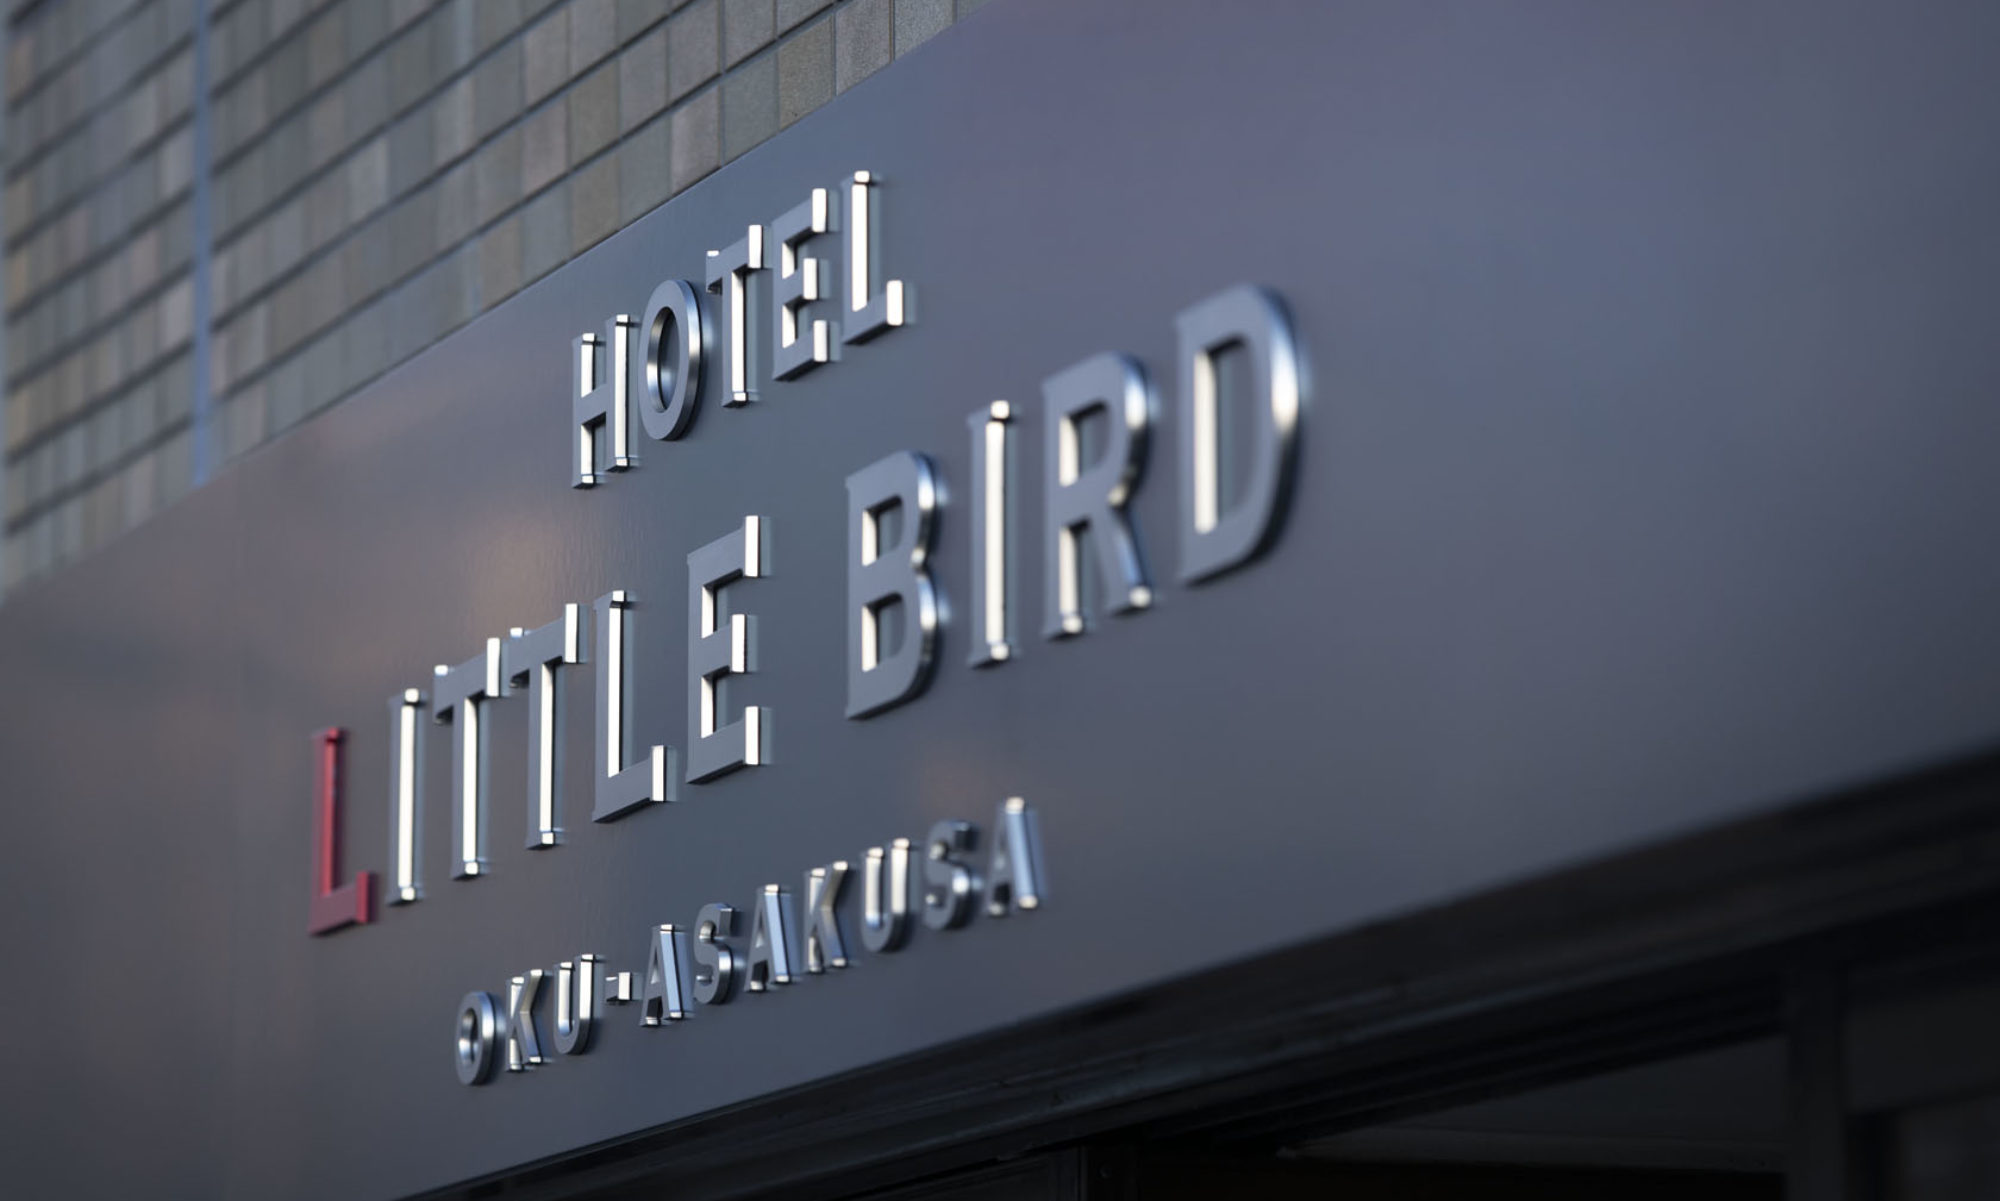 Hotel Little Bird Oku-asakusa